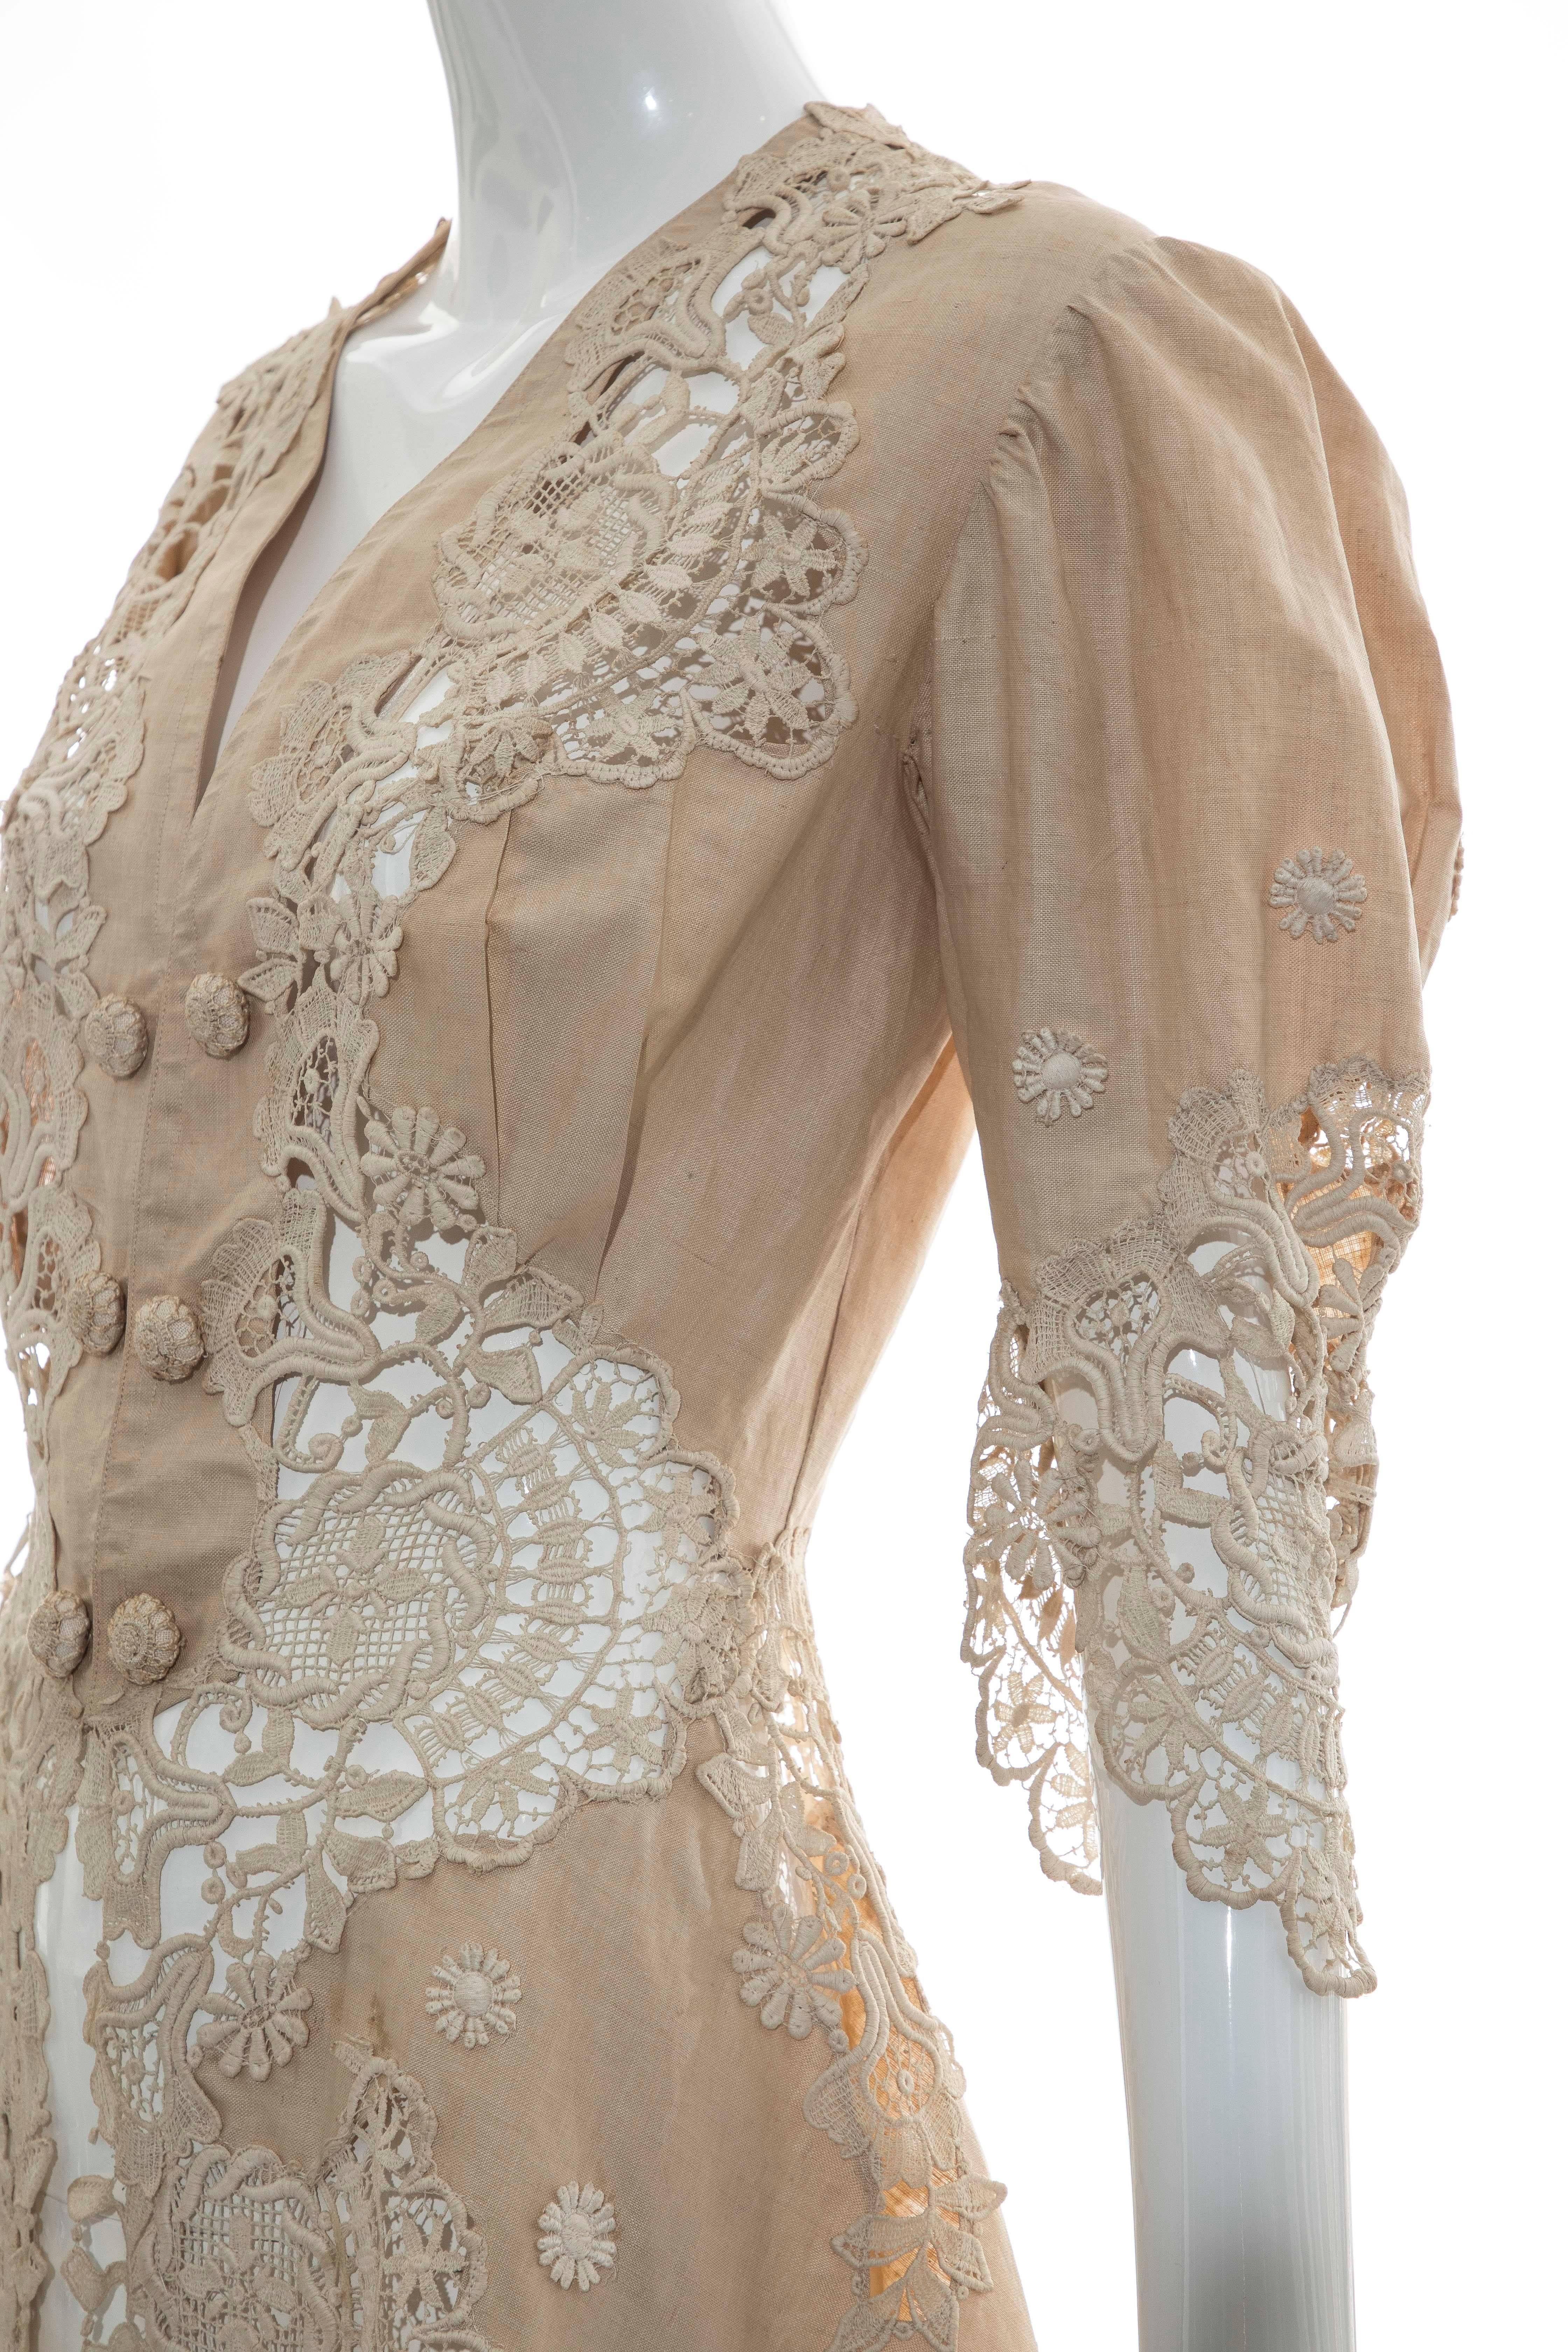 Edwardian Cut Work Lace Linen Jacket, Circa 1905 10